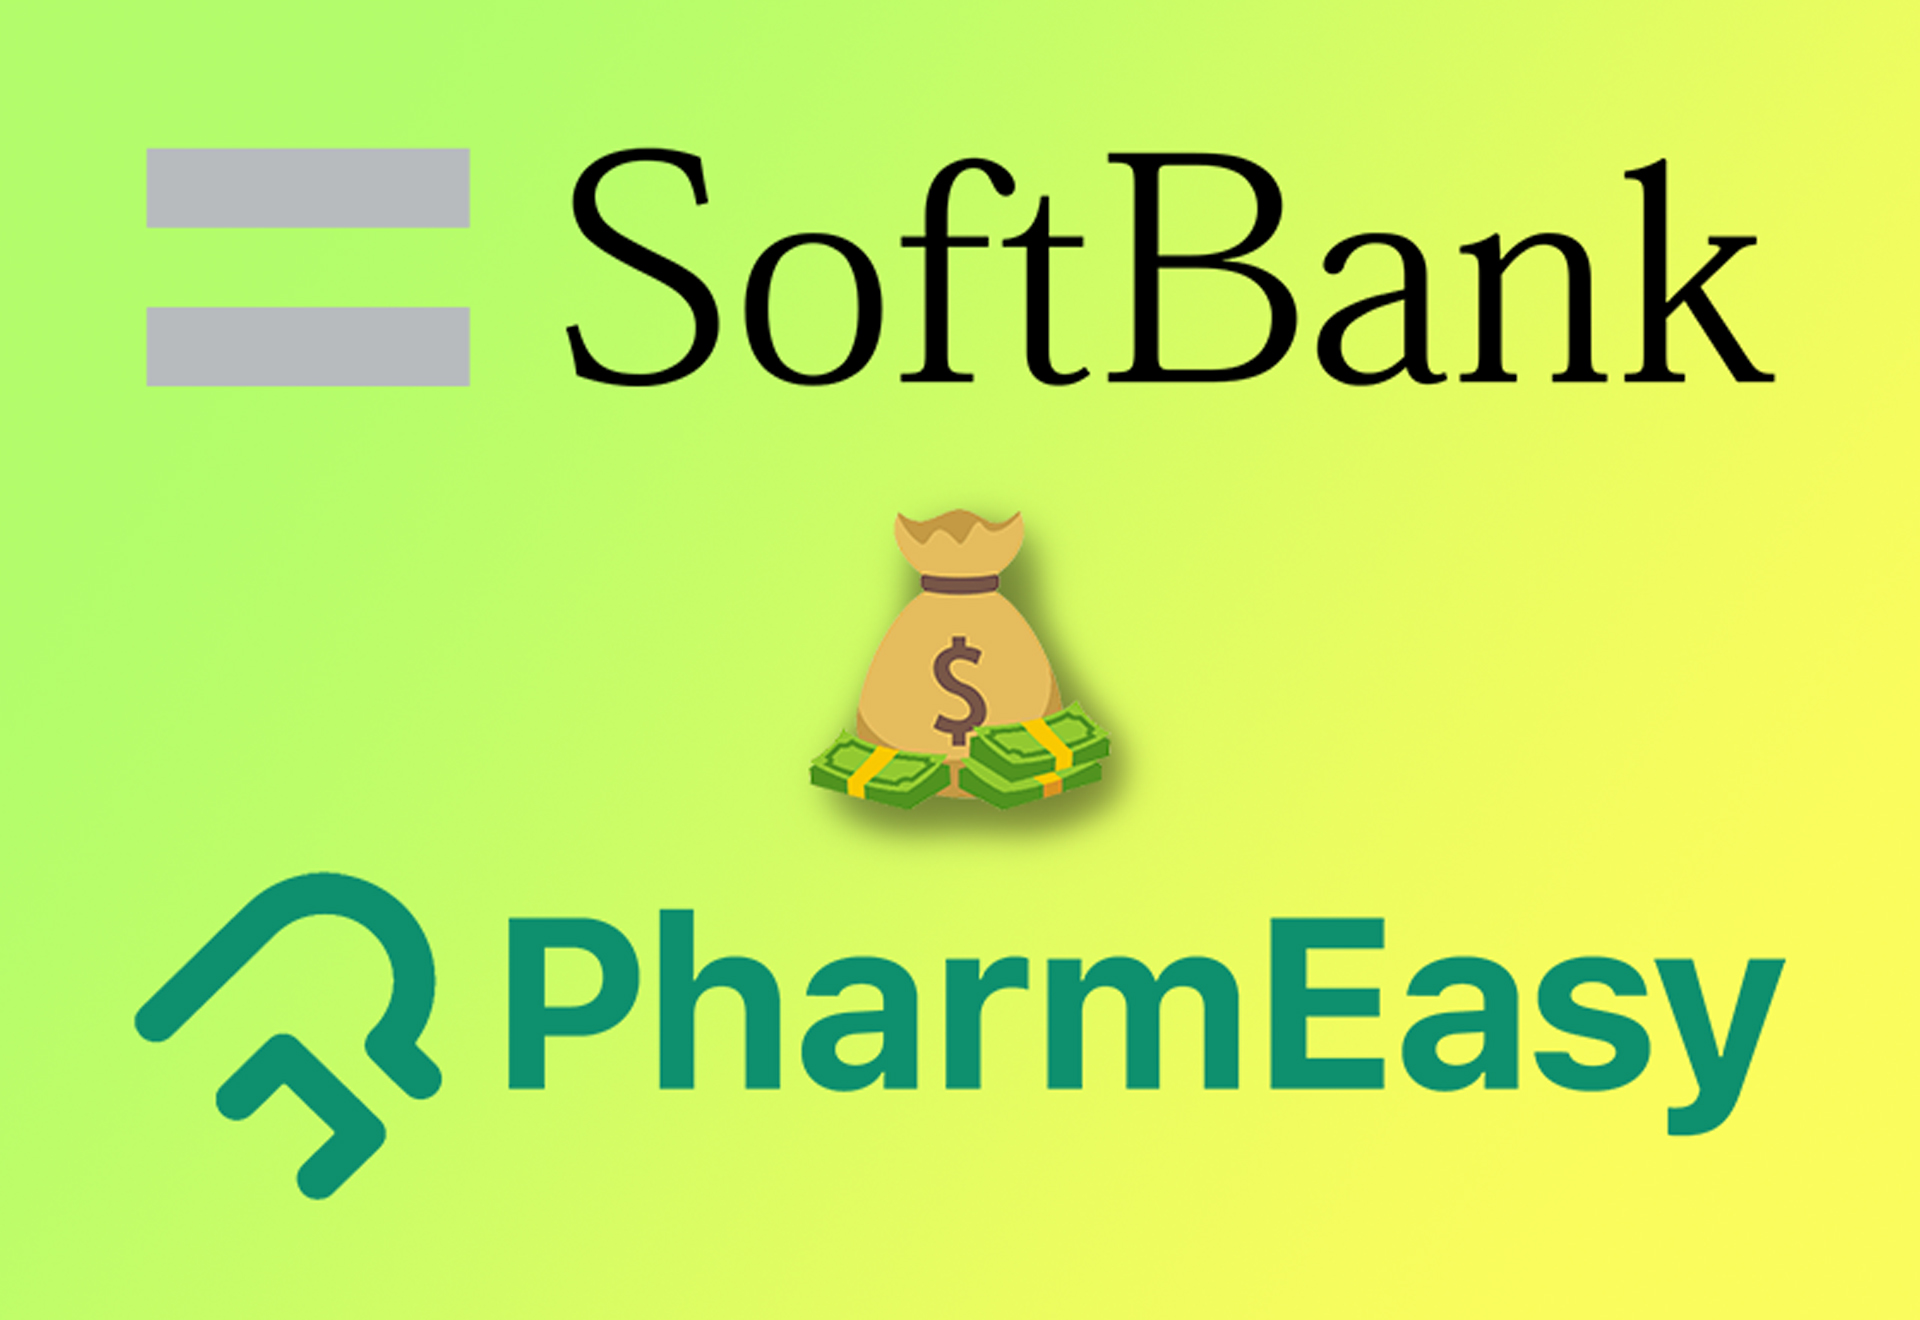 Softbank and PharmEasy logo on a gradient background